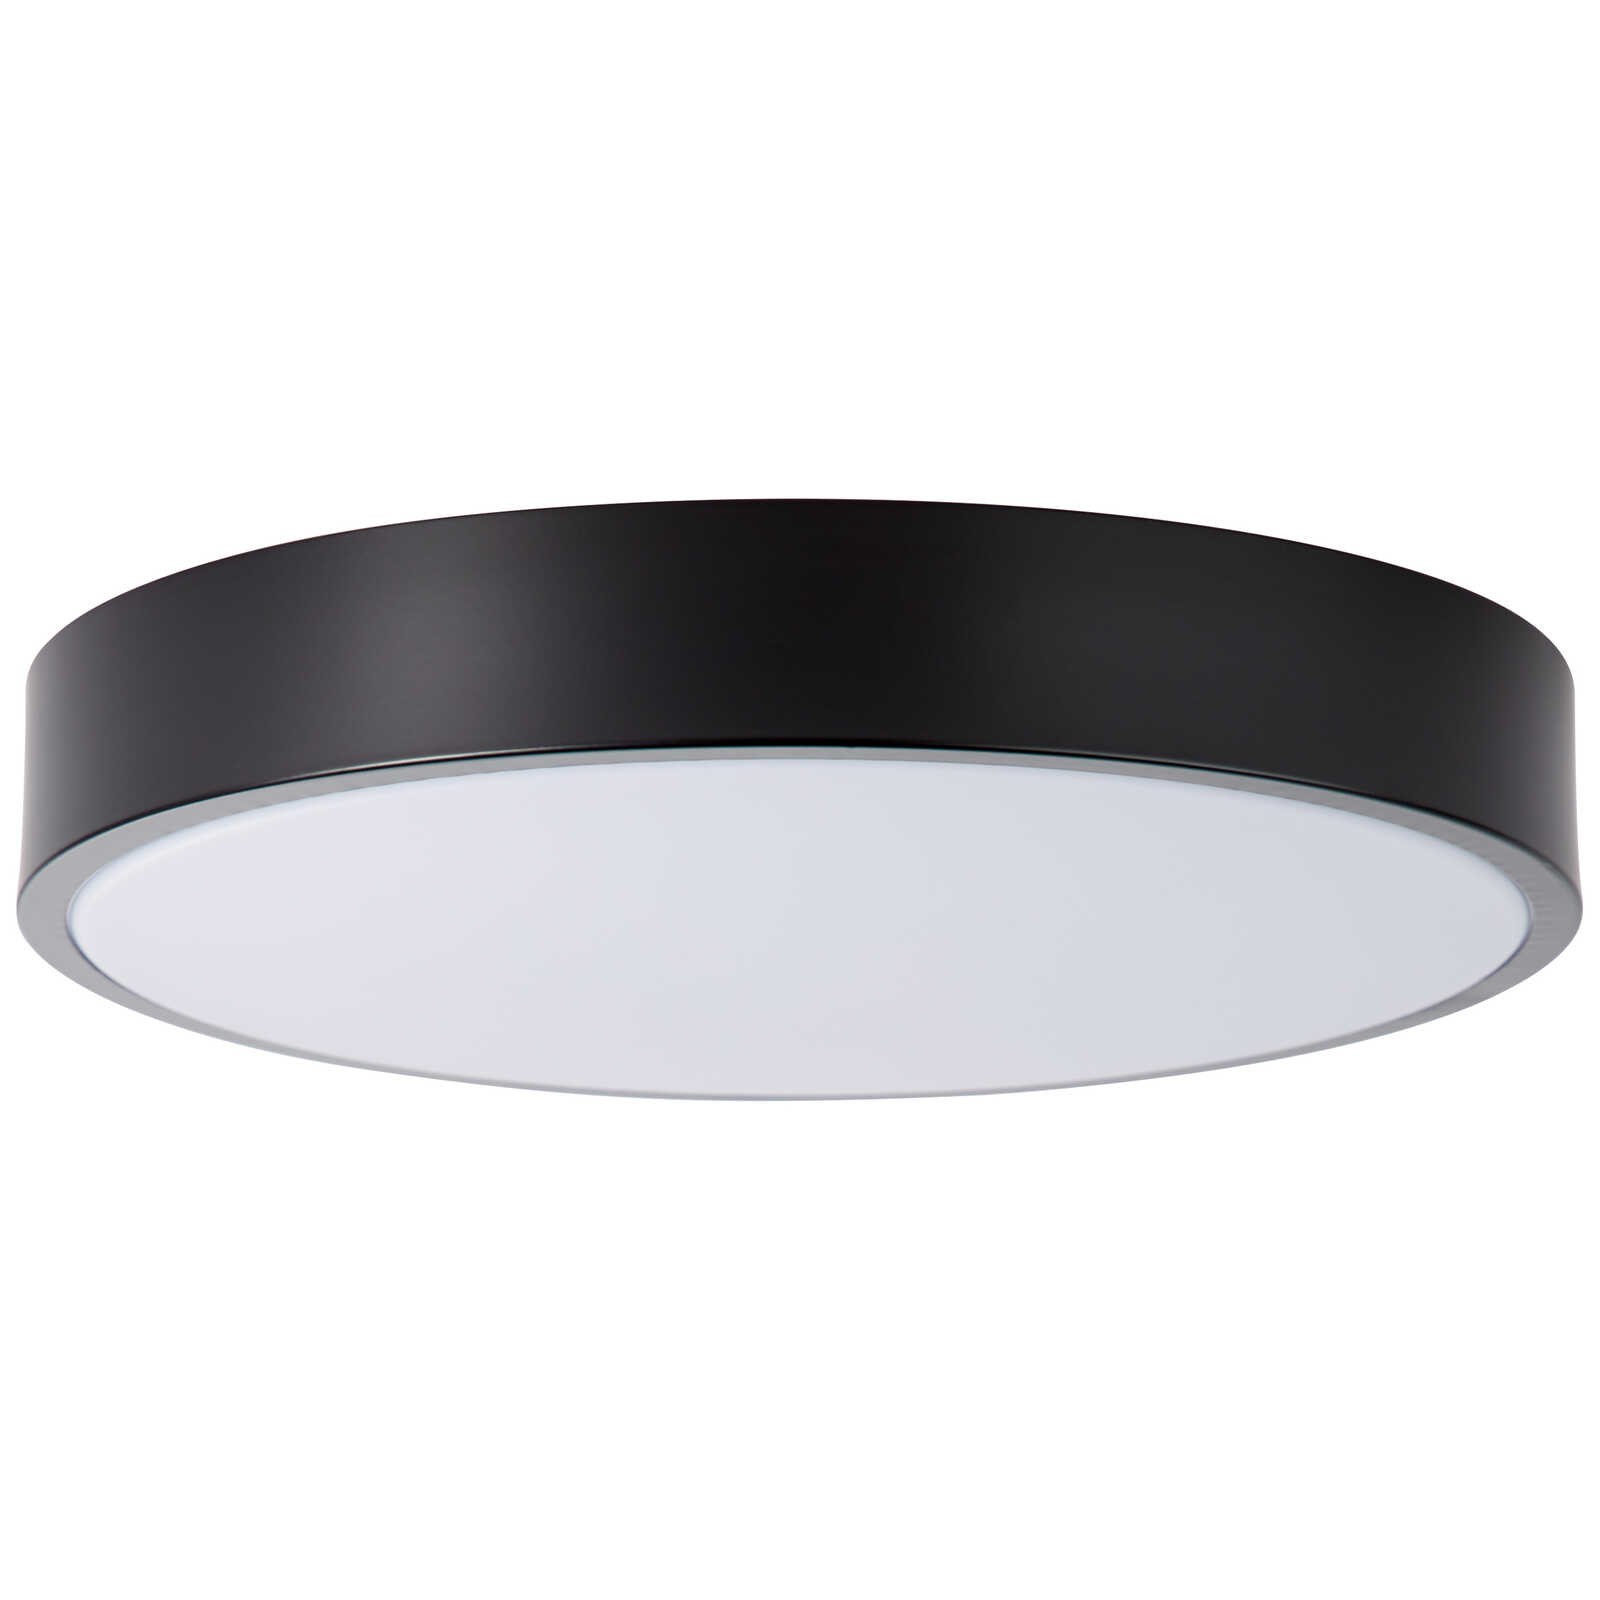             Plastic ceiling light - Niklas 5 - Black
        